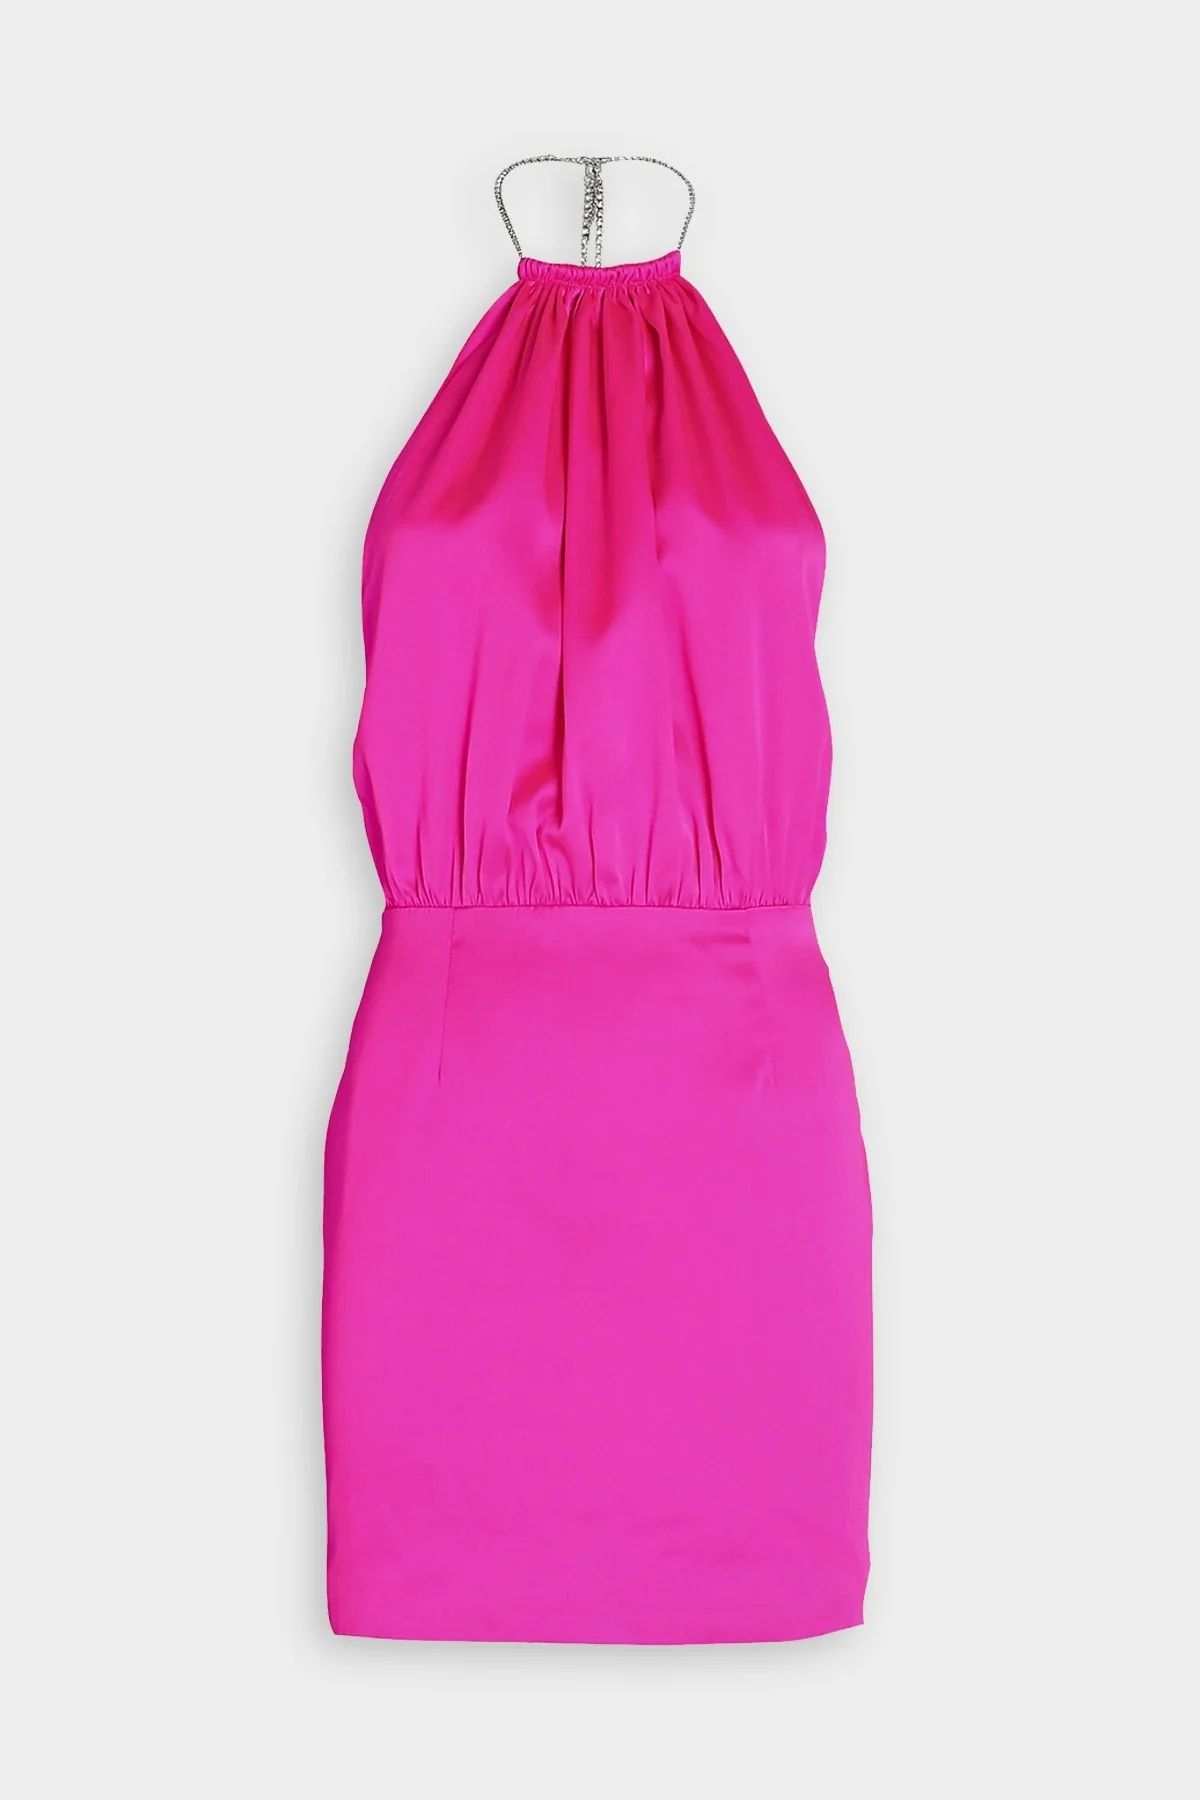 Anahita Dress in Neon Pink - XS | Shop Olivia